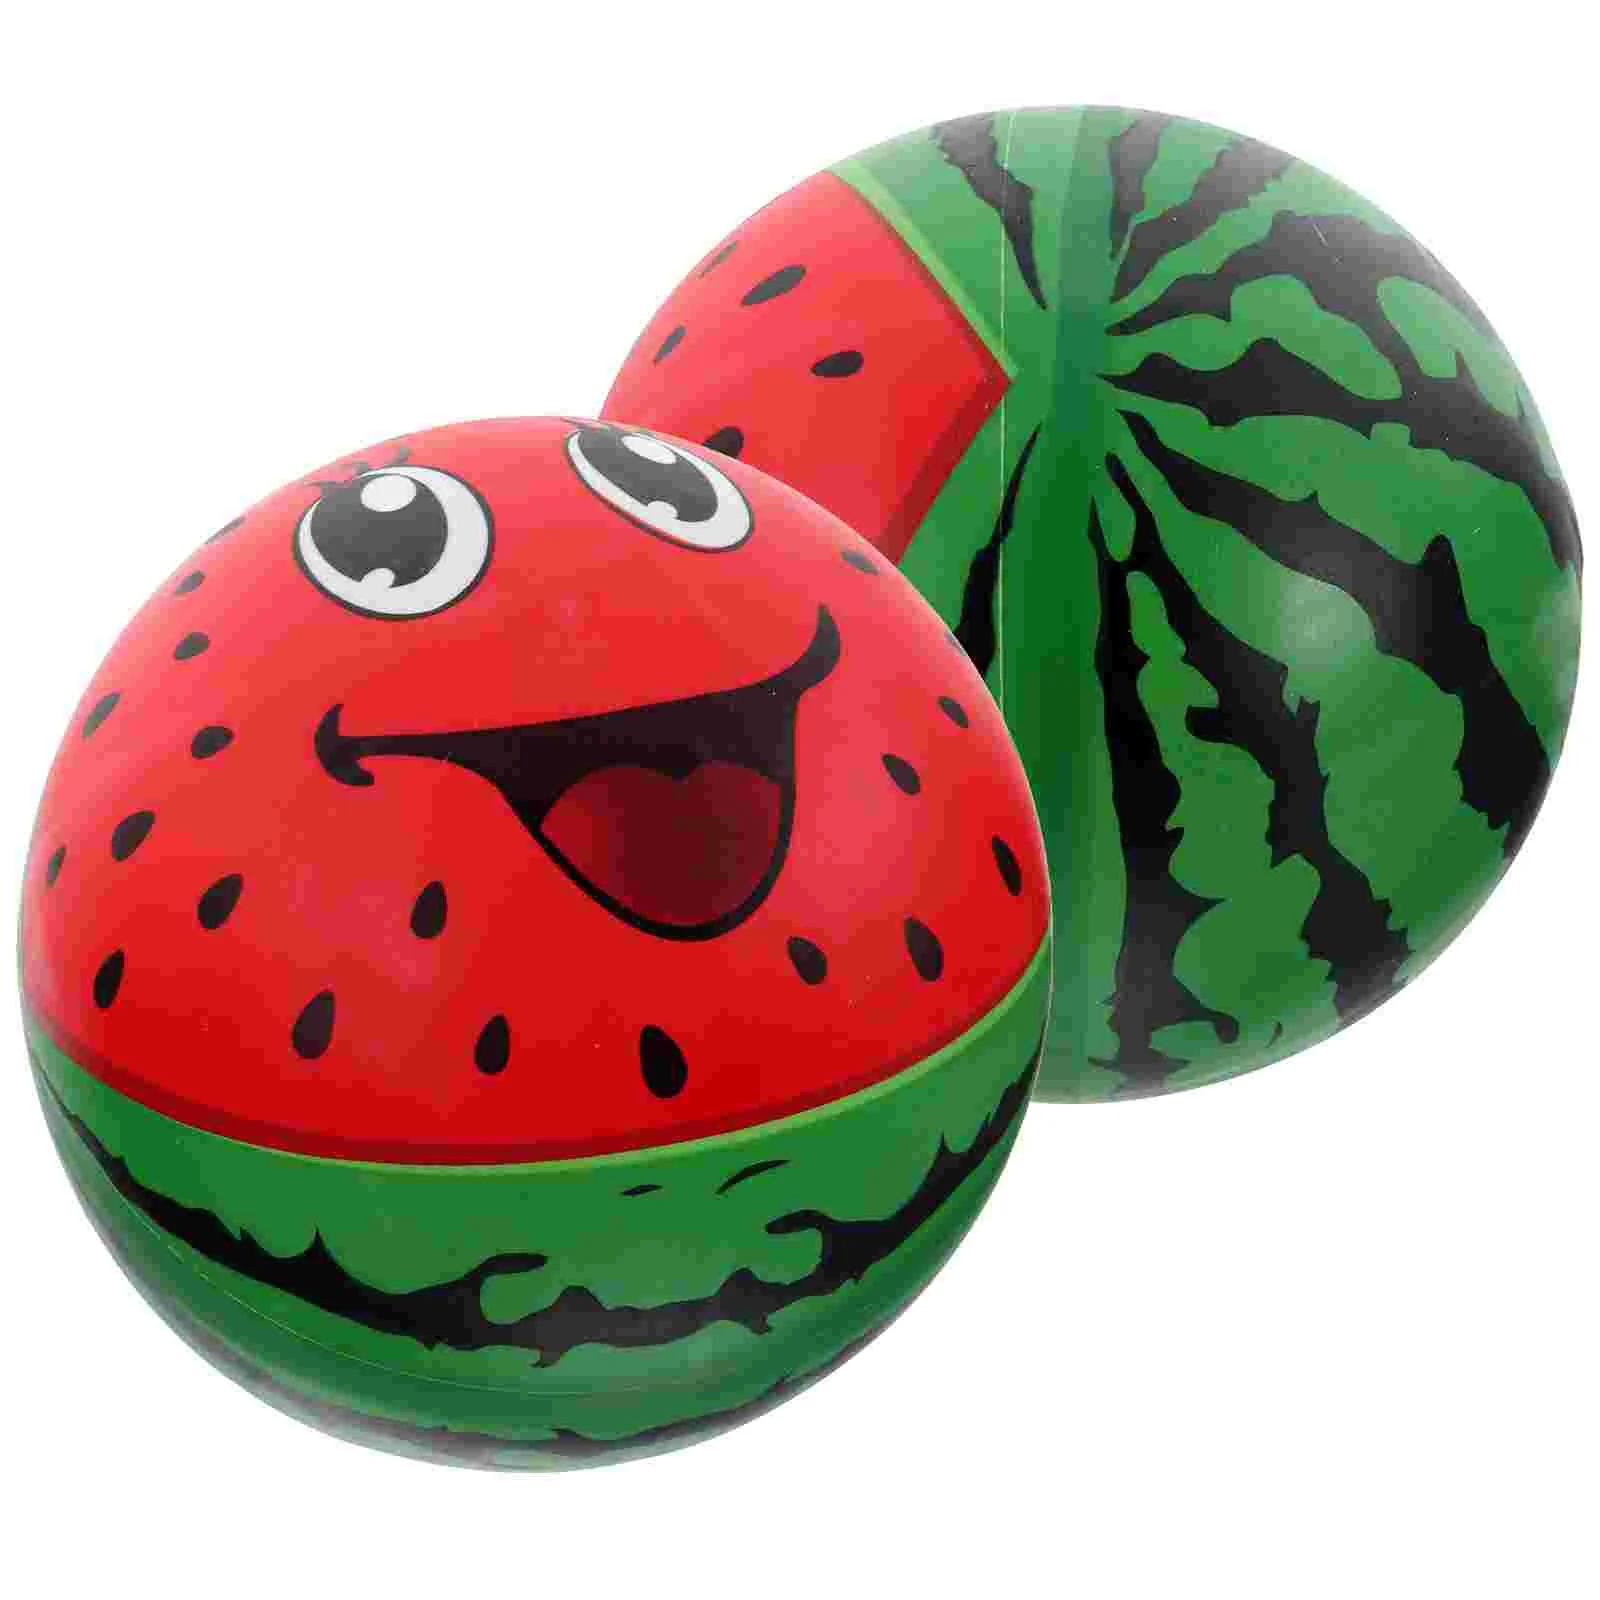 

2 Pcs Inflatable Pool Party Favor Watermelon Beach Ball for Decor Balls Portable Pvc Big Toy